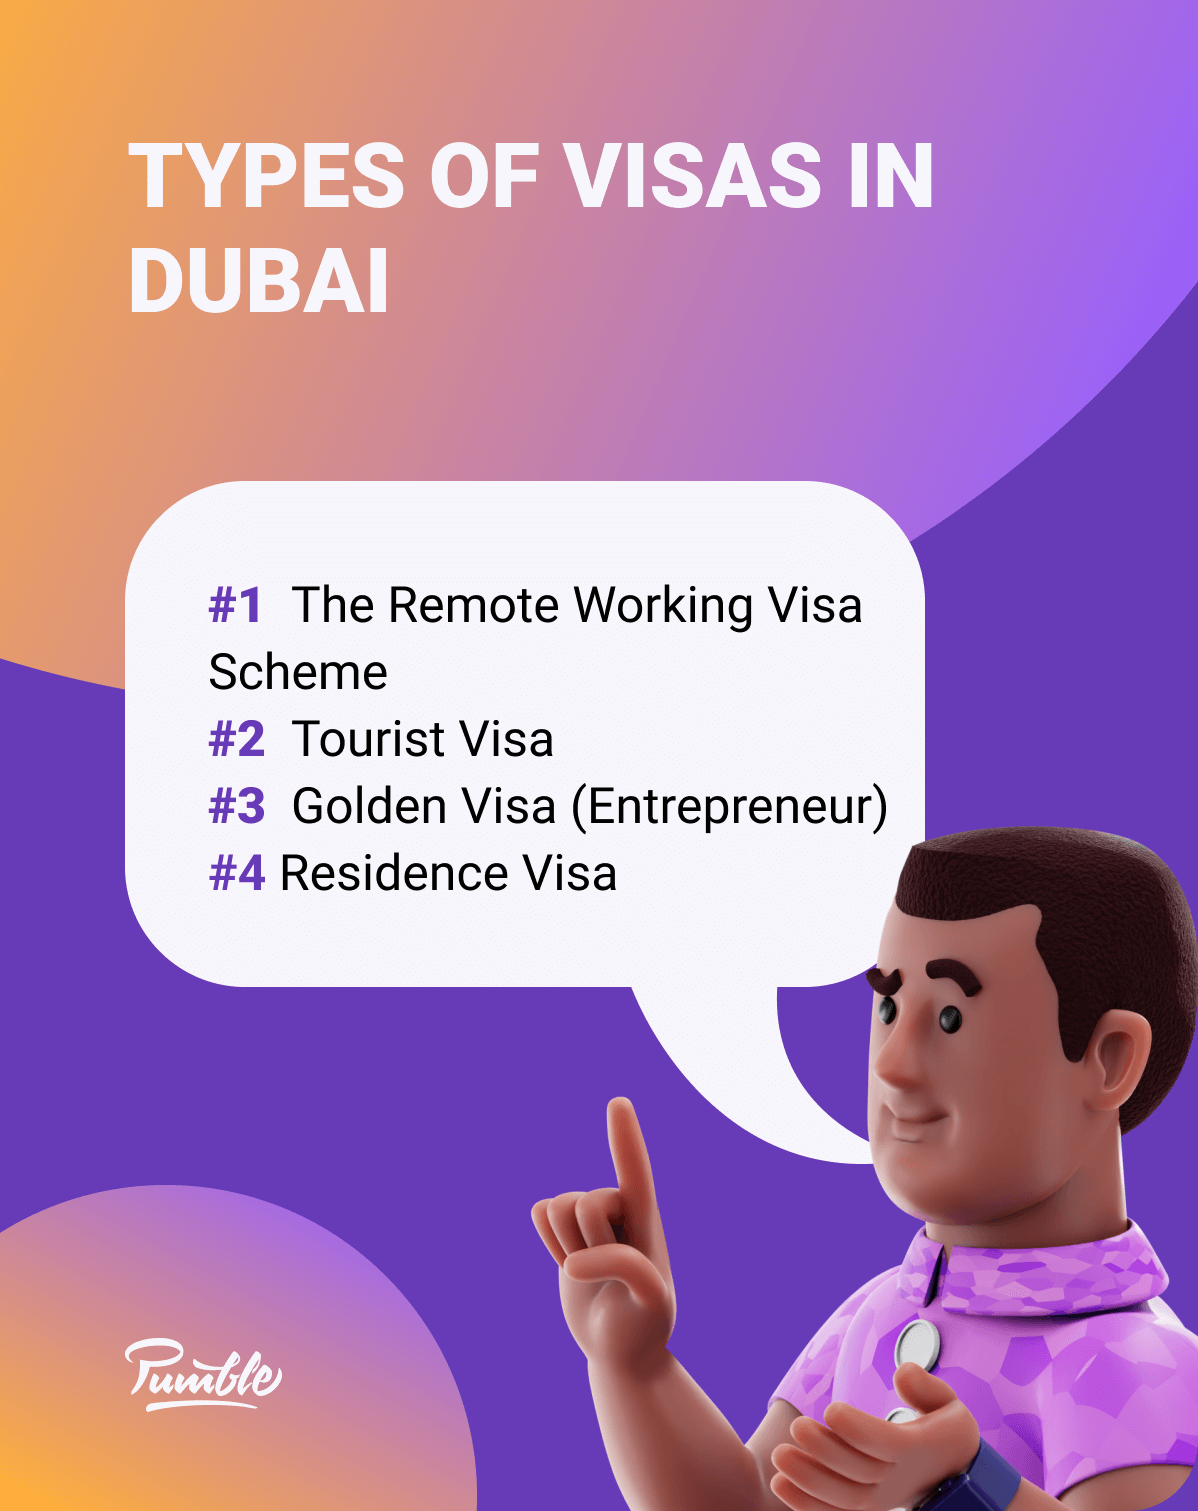 Types of visas for digital nomads in Dubai